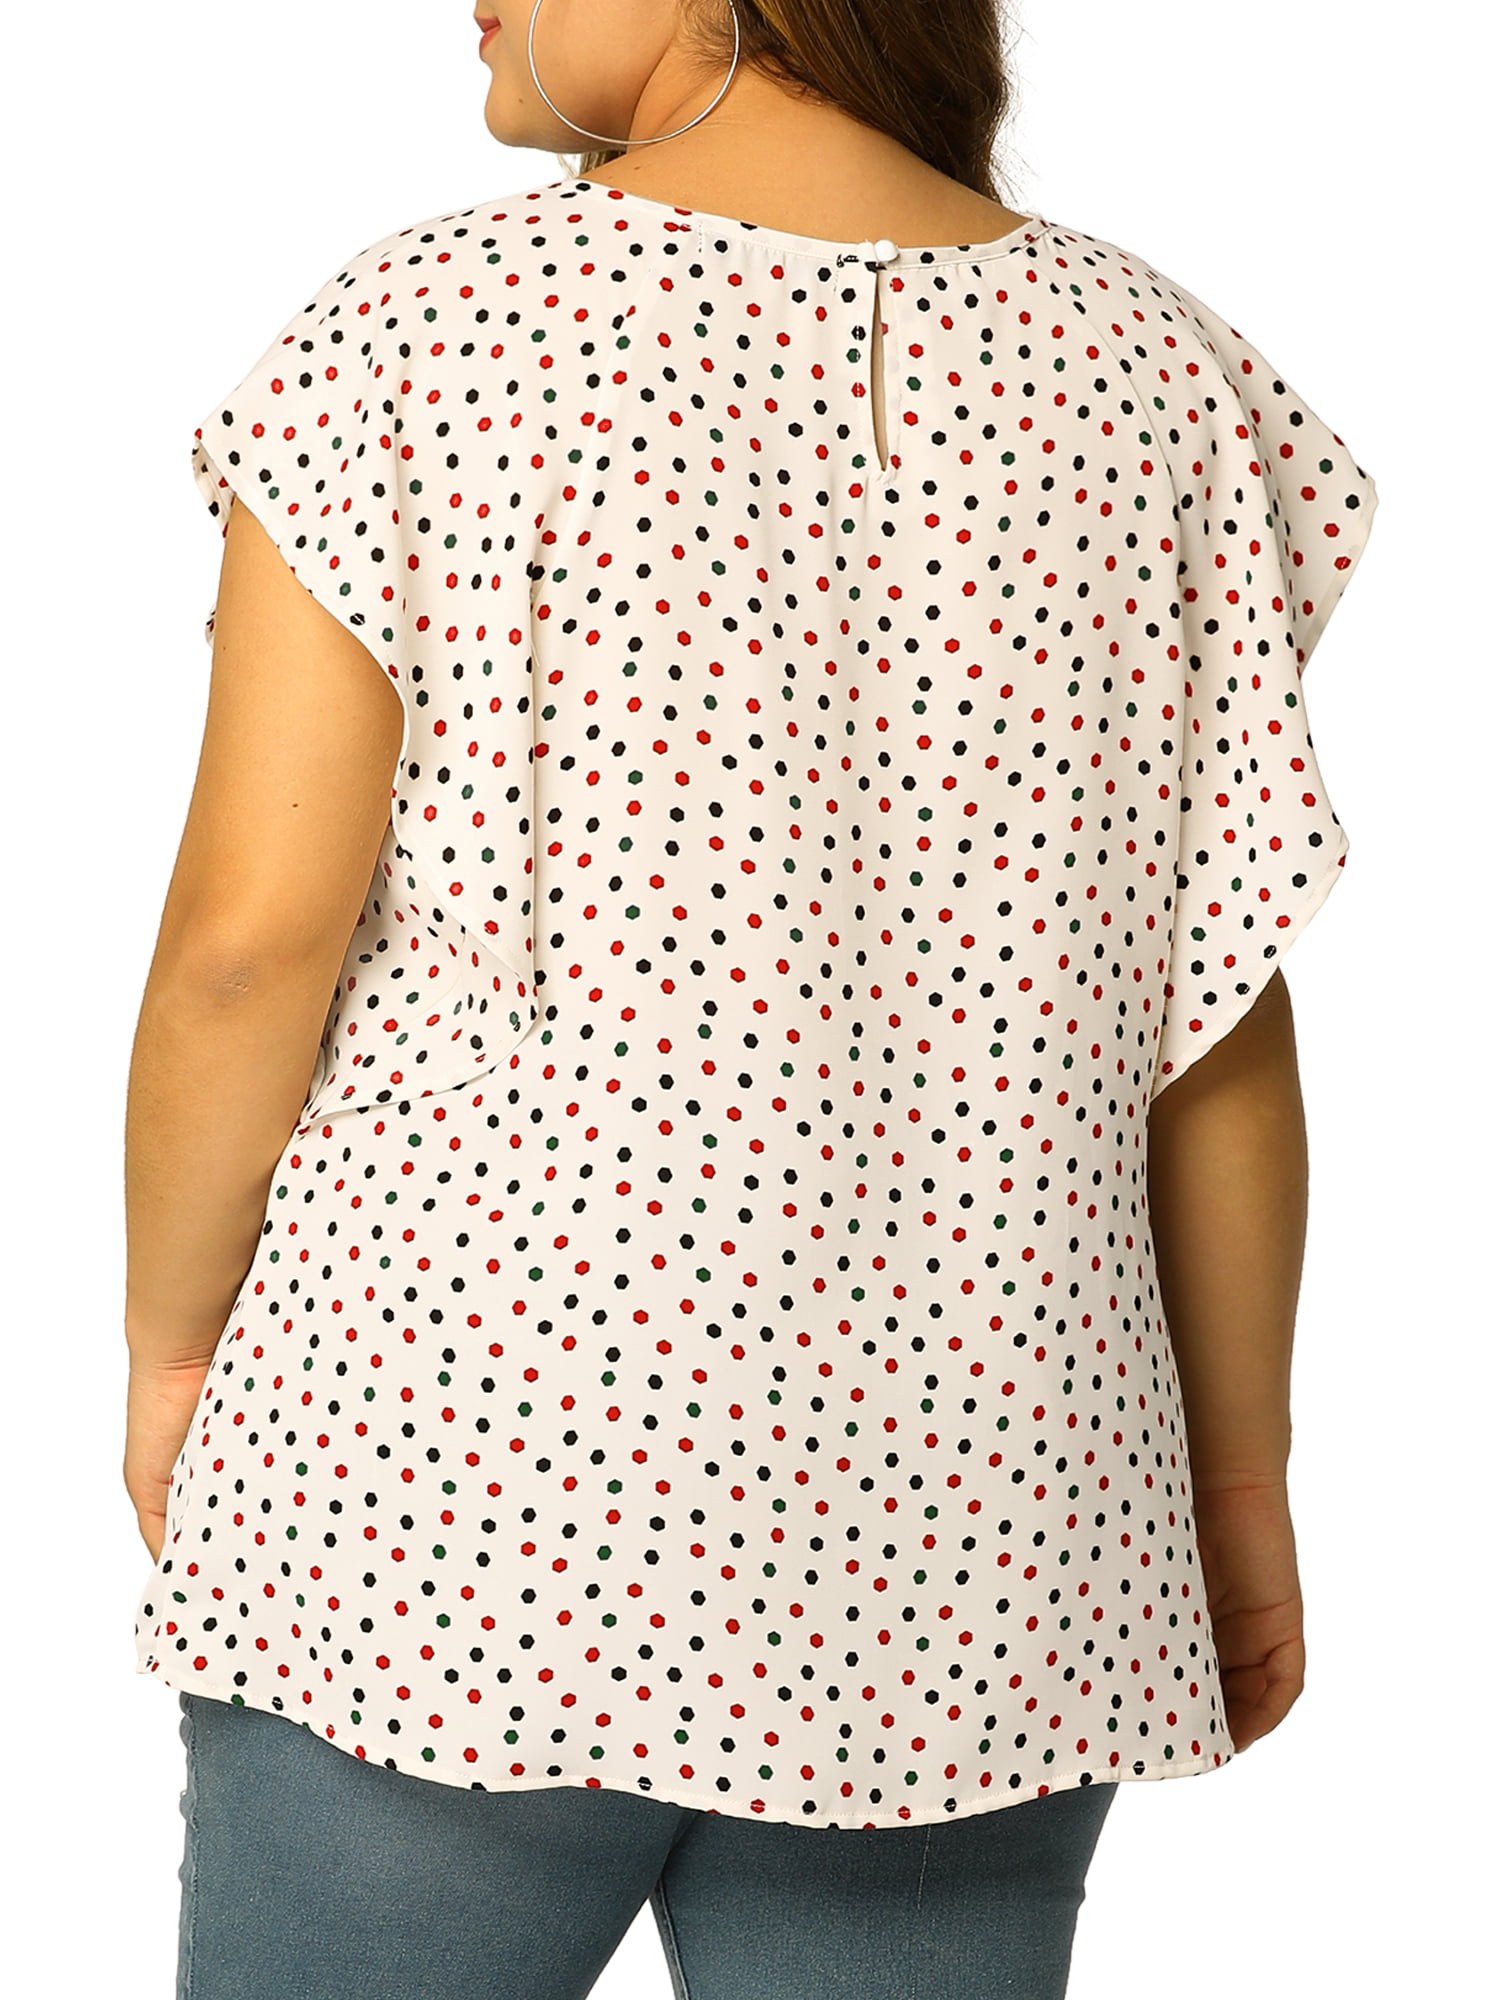 Fymall Women's Casual Ruffle Polka Dot Chiffon Shirts Blouse Tops